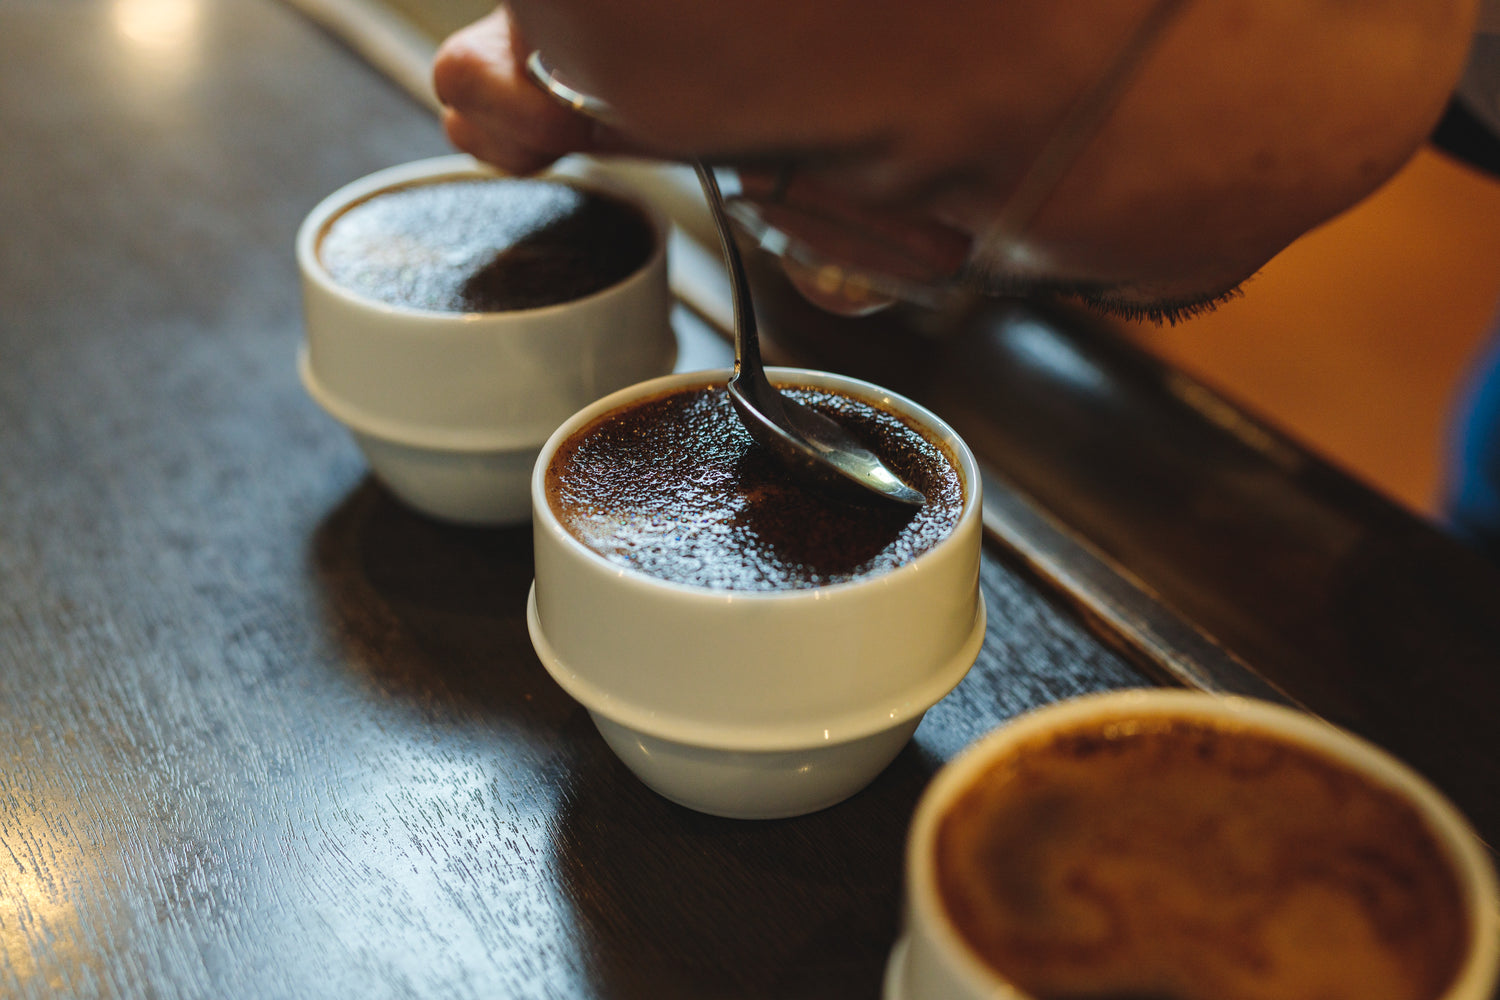 Cupping Testsとは、コーヒー豆の量や焙煎度合い、抽出方法などの条件を揃えてコーヒーをテイスティングして官能評価を行う方法です。FlavorやAcidity、After tasteなどの10項目でコーヒー豆の品質や特徴を総合的に判断します。